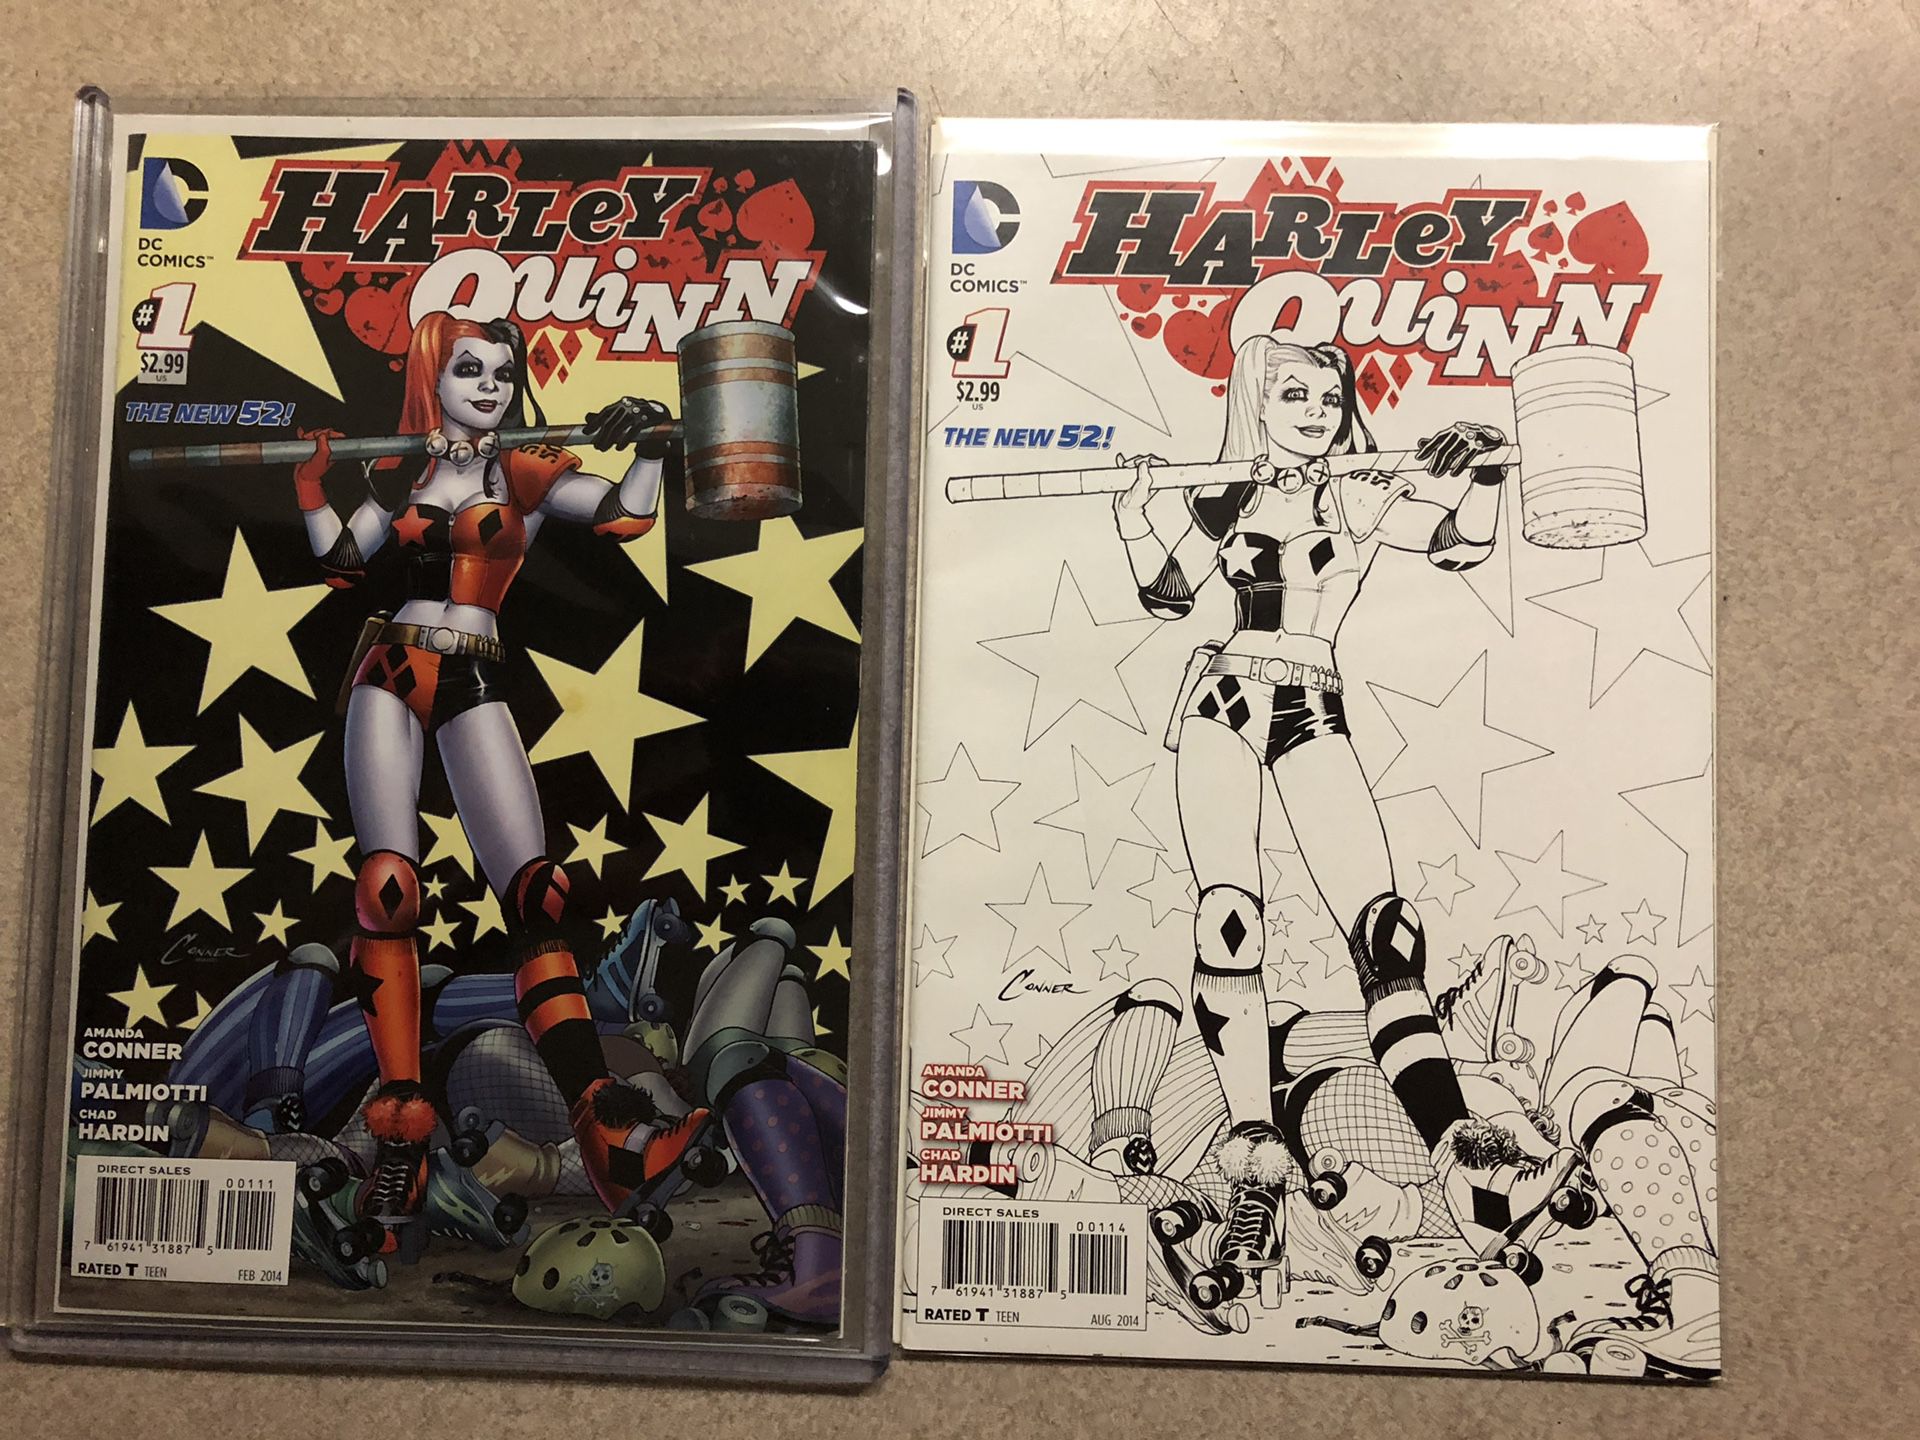 Full run of both series Harley Quinn DC New52 and Batman Adventures